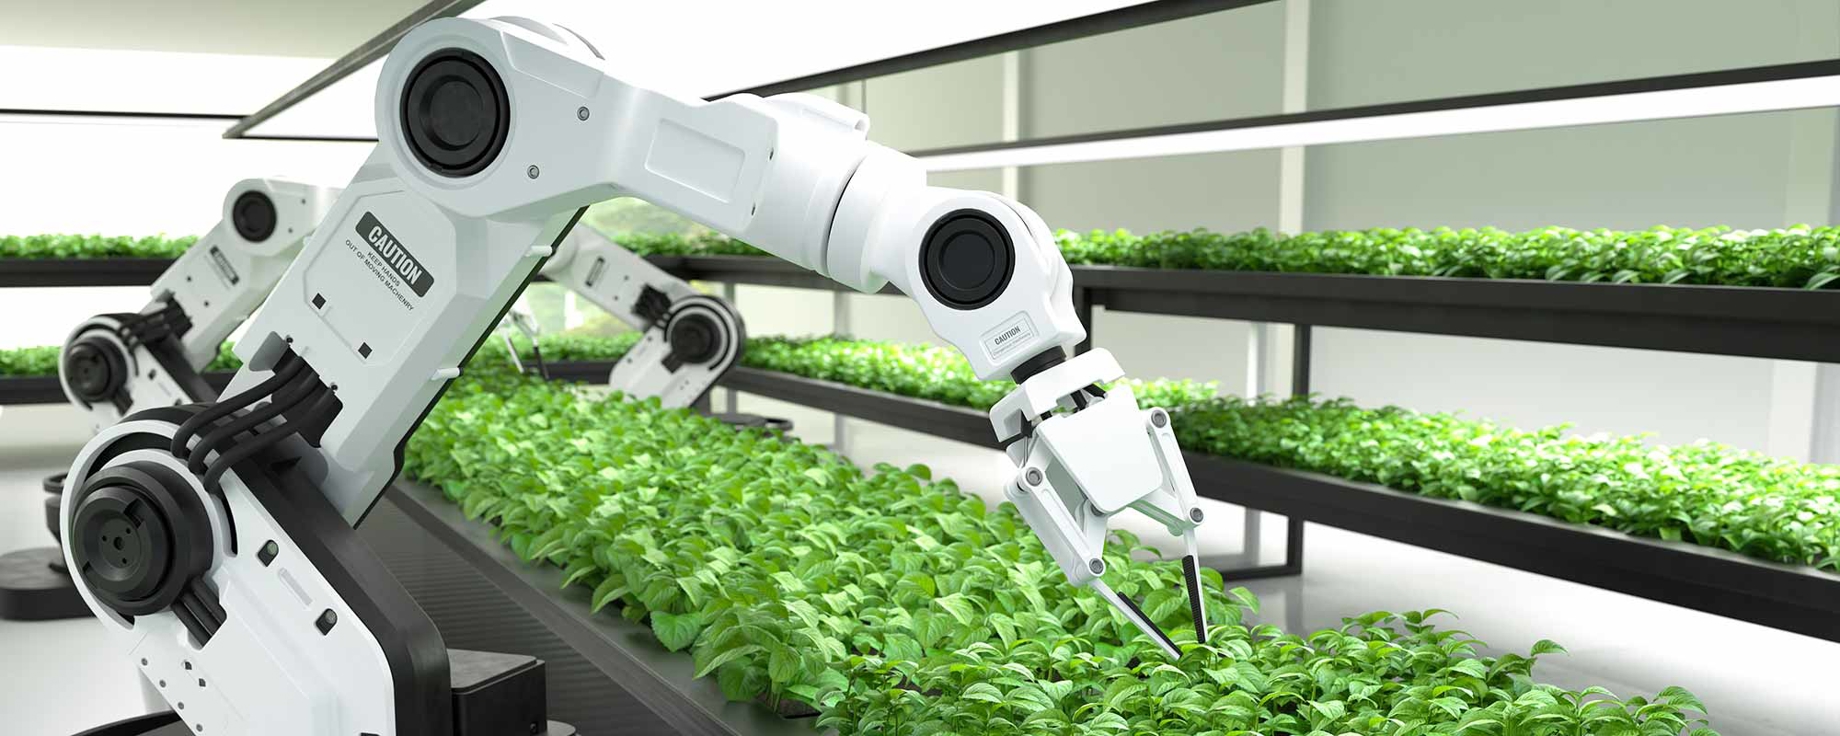 Robot manufacturing future